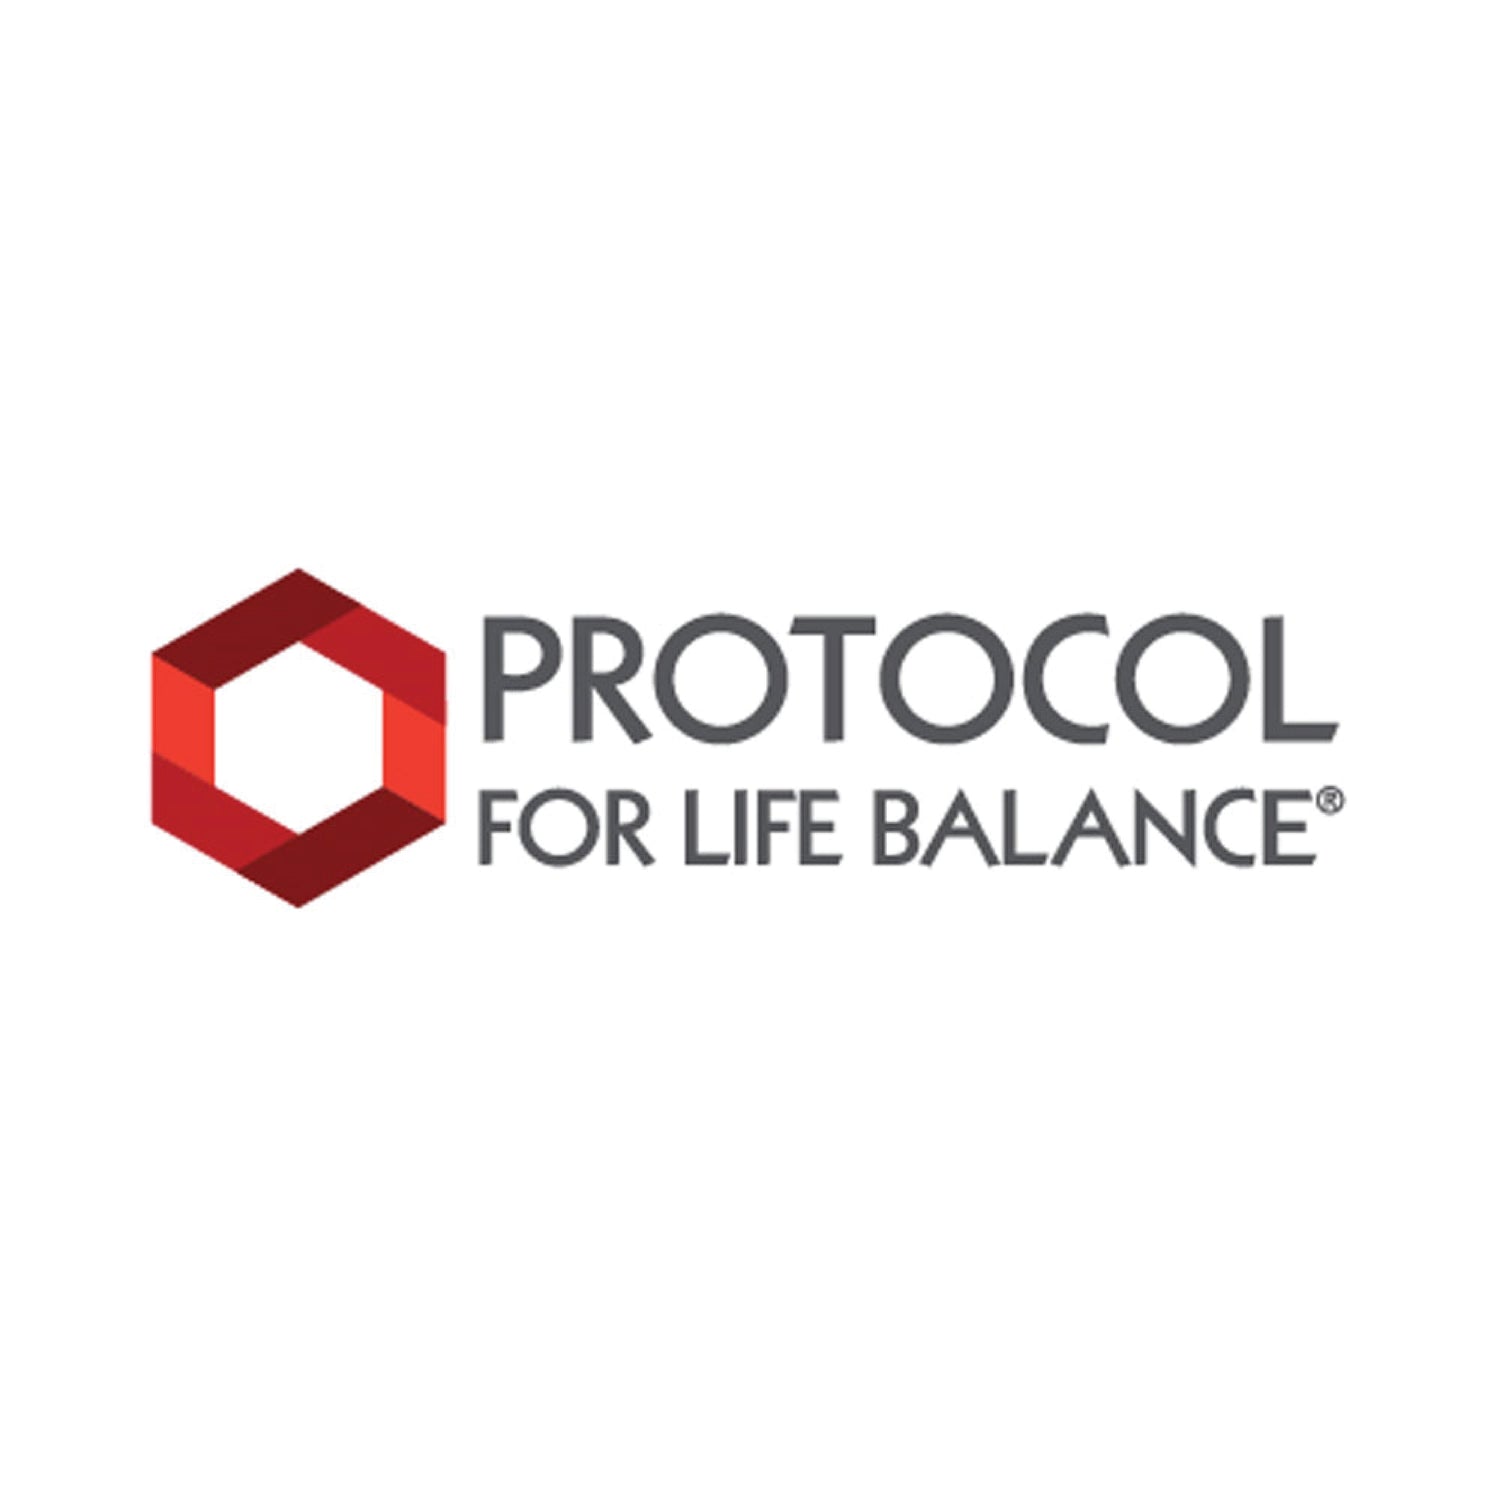 Protocol for Life Balance, DIM 200 Plus CDG 100, 90 Veg Capsules - Bloom Concept